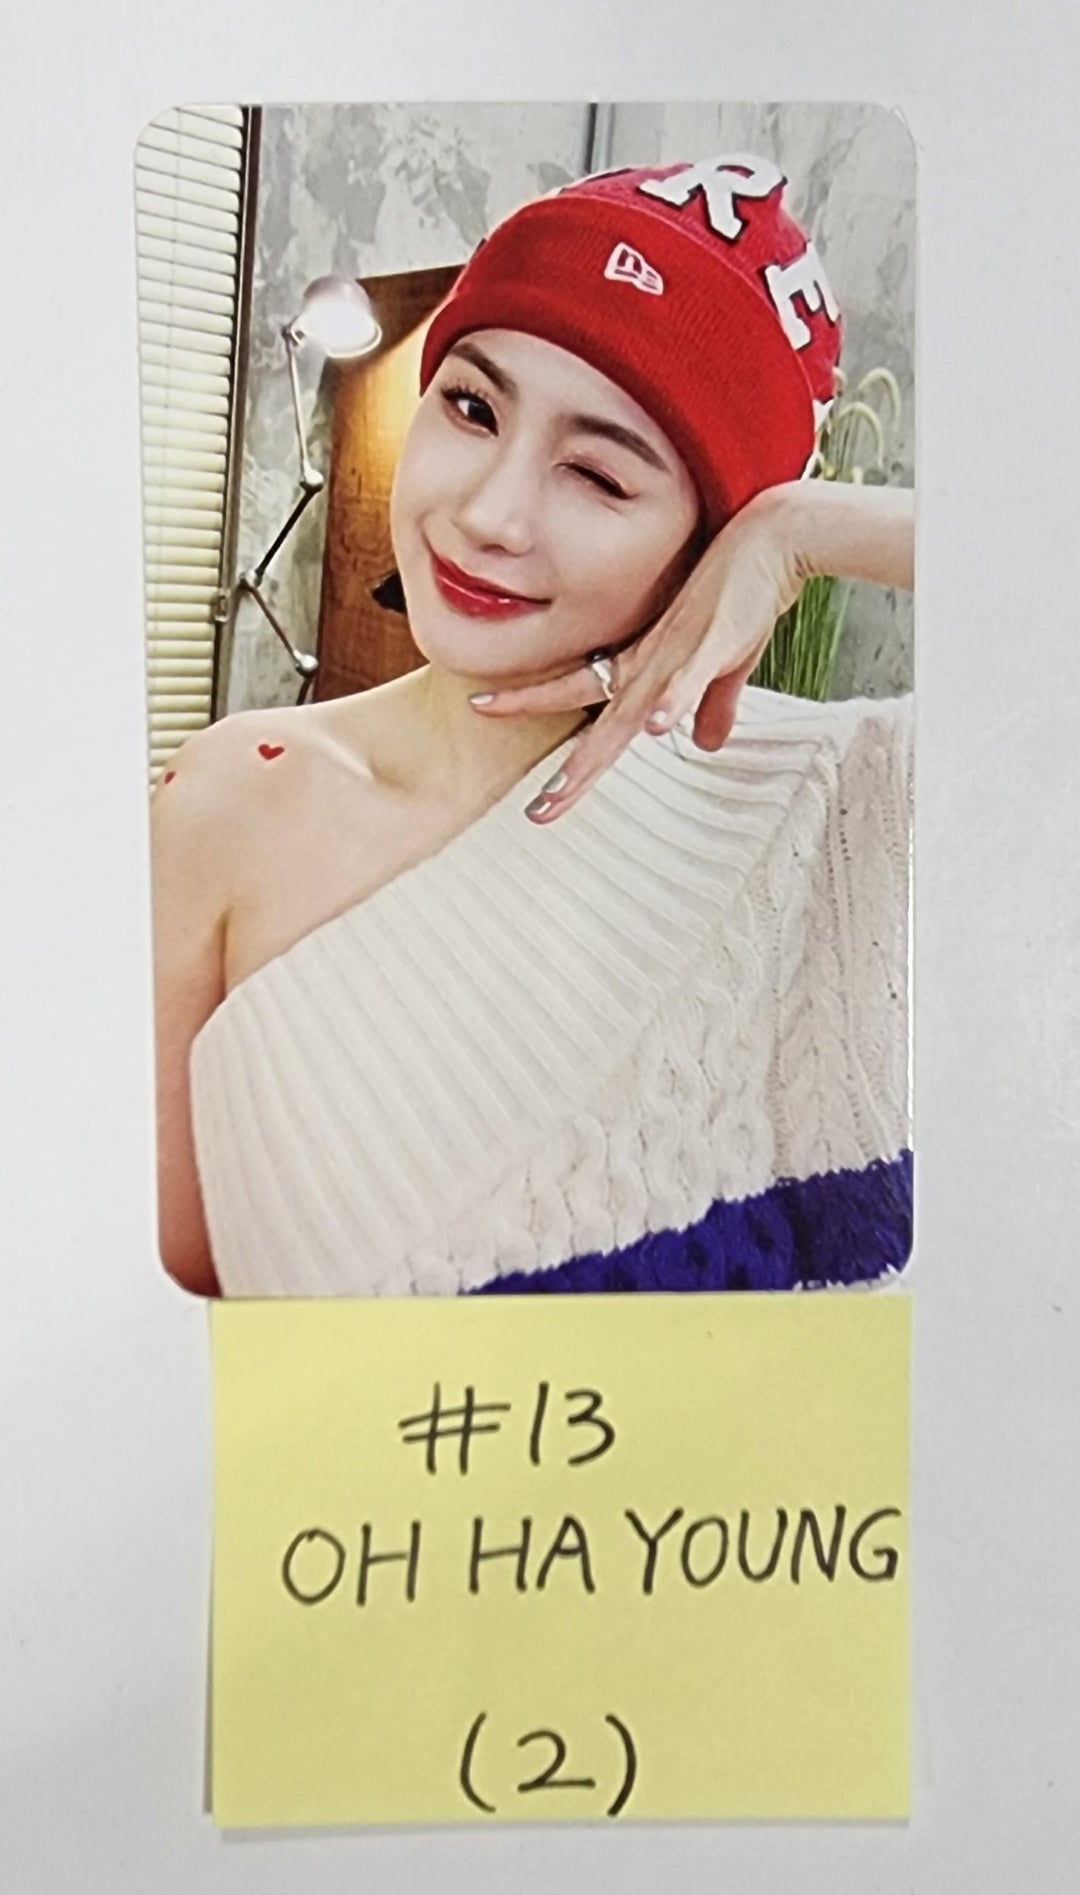 Apink "SELF" 10th Mini Album - Official Photocard, Postcard